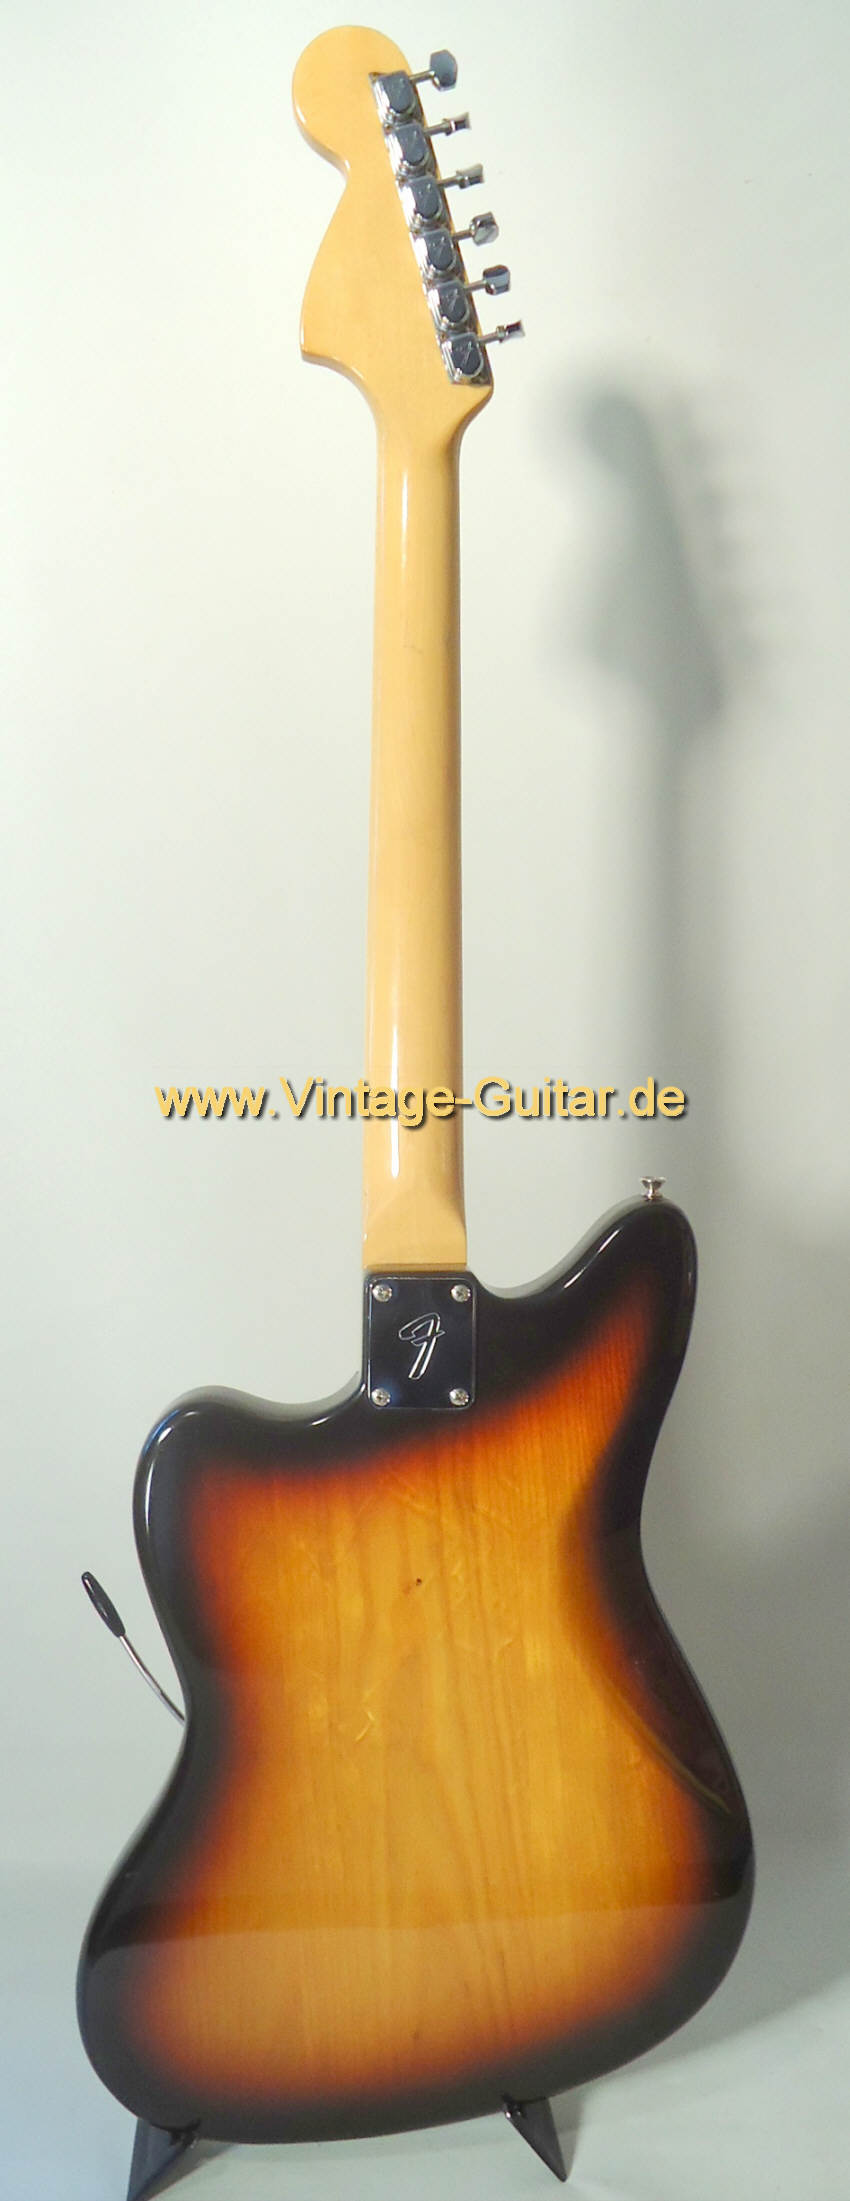 Fender-Jazzmaster-1977-sunburst-b.jpg